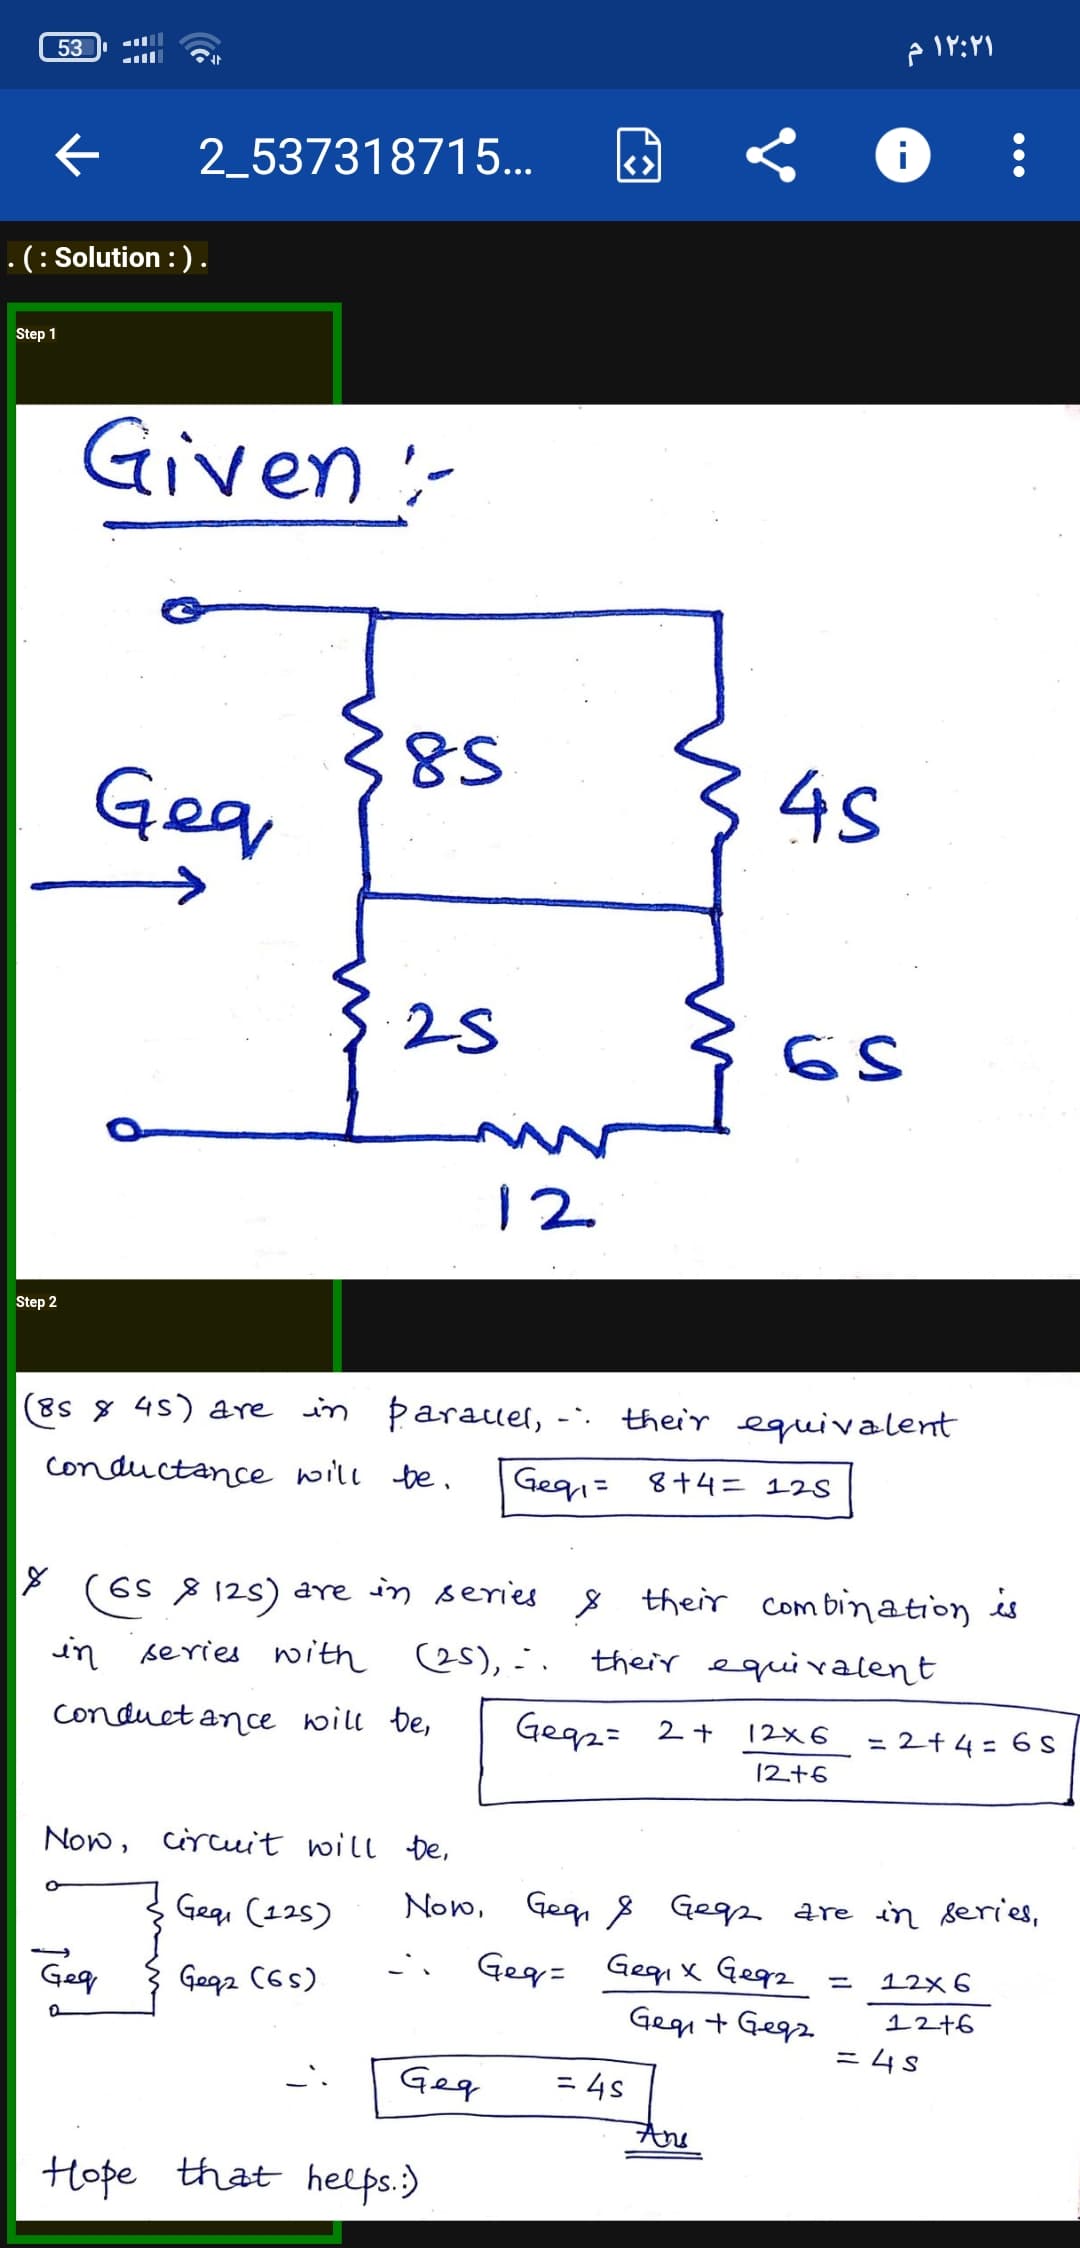 53
۱۲:۲۱ م
2_537318715...
<>
.(: Solution : ).
Step 1
Given:-
8S
Gea
34s
25
12
Step 2
(8s 8 45) are in Þarauel,
their equivalent
Conductance will be.
Geg= 8+4= 12S
(6s 8 125) are in series 8 their Com bination is
in series with es), -.
their equivalent
conduct ance will be,
Gegz: 2+
12x6
= 2+4 = 6 S
12+6
Now, circuit will De,
Gegi (125)
Now, Geg, 8 Gegz are in series,
Geg= Gegi x Gegz
Gegi + Gegz
Gegz C6s)
12×6
12+6
= 4S
Geq
= 4s
And
Hope that helps.)
